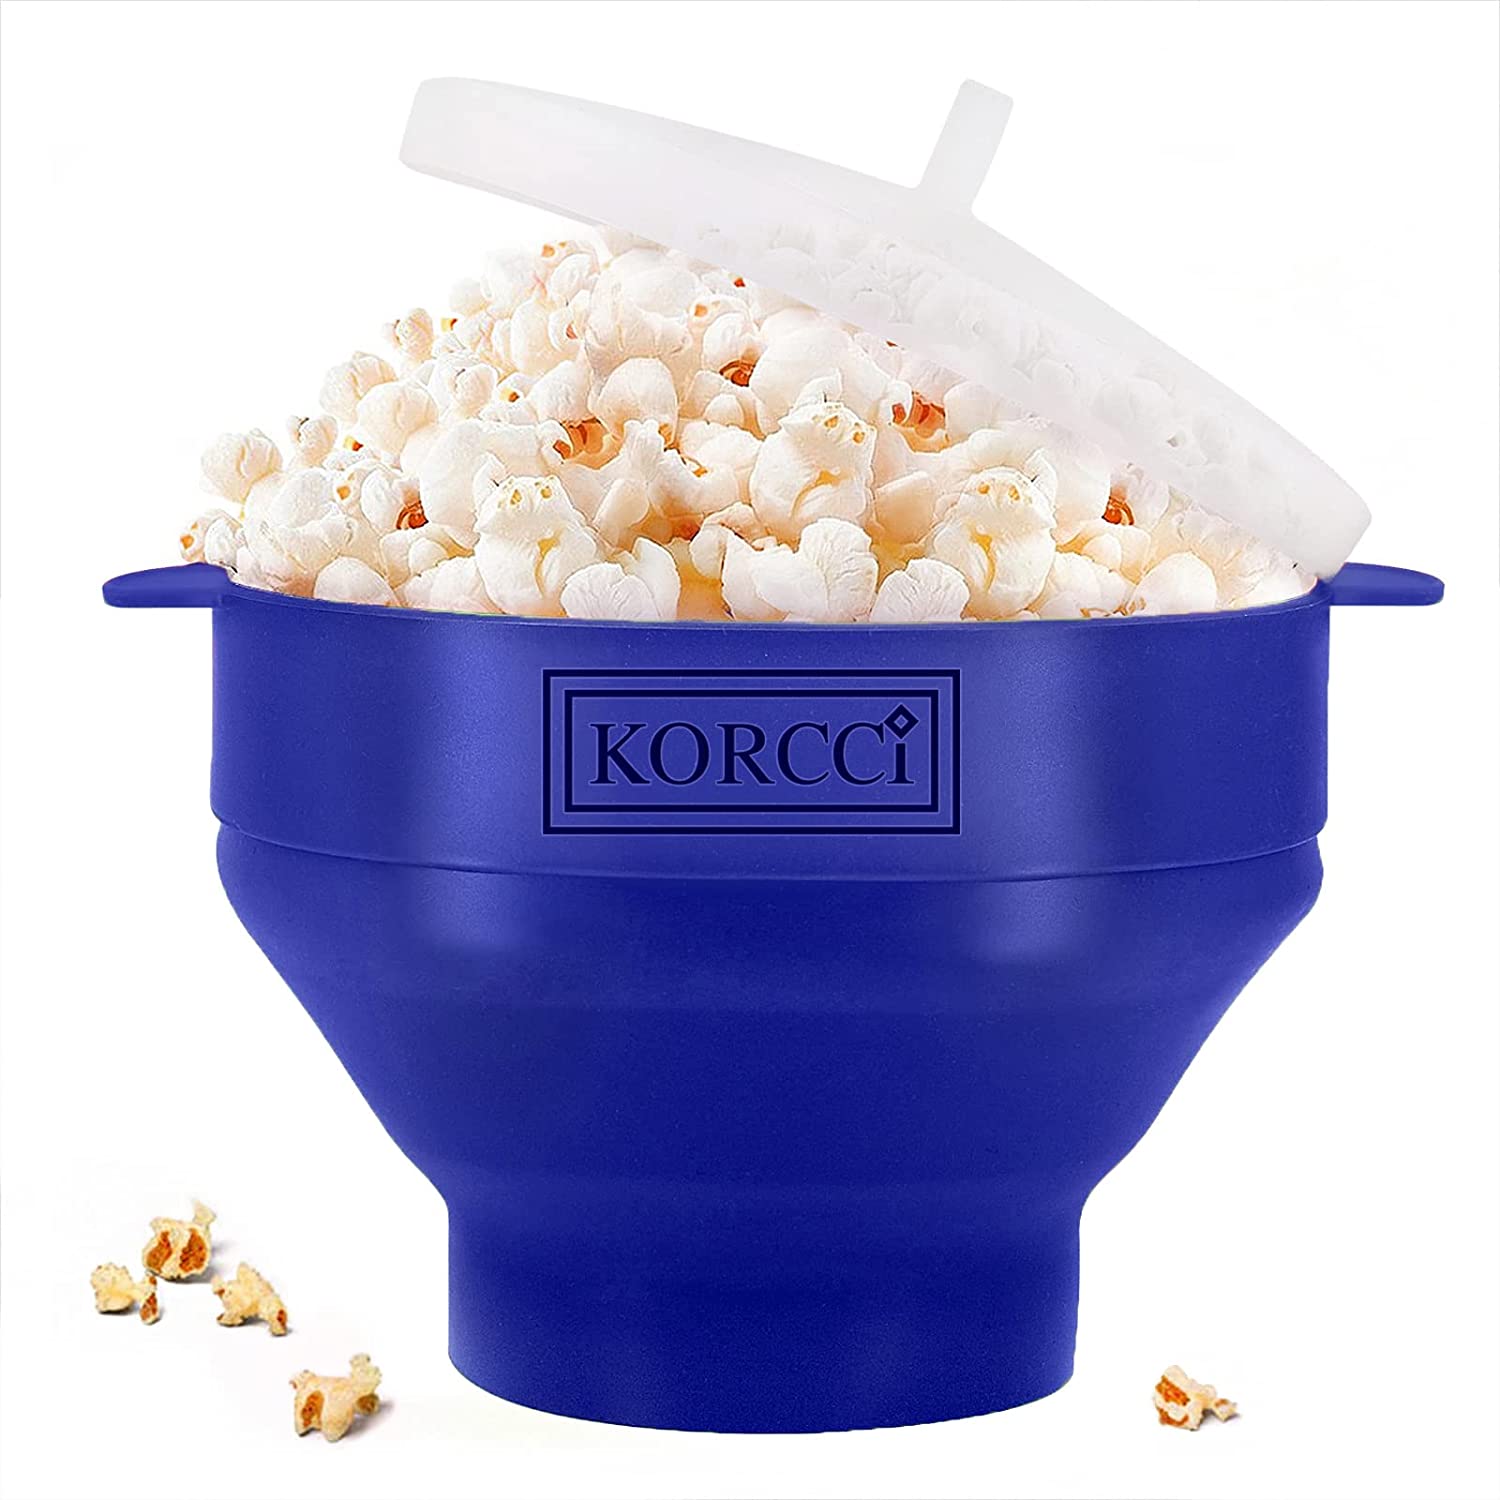 Korcci Space-Saving Ultra-Fast Popcorn Maker